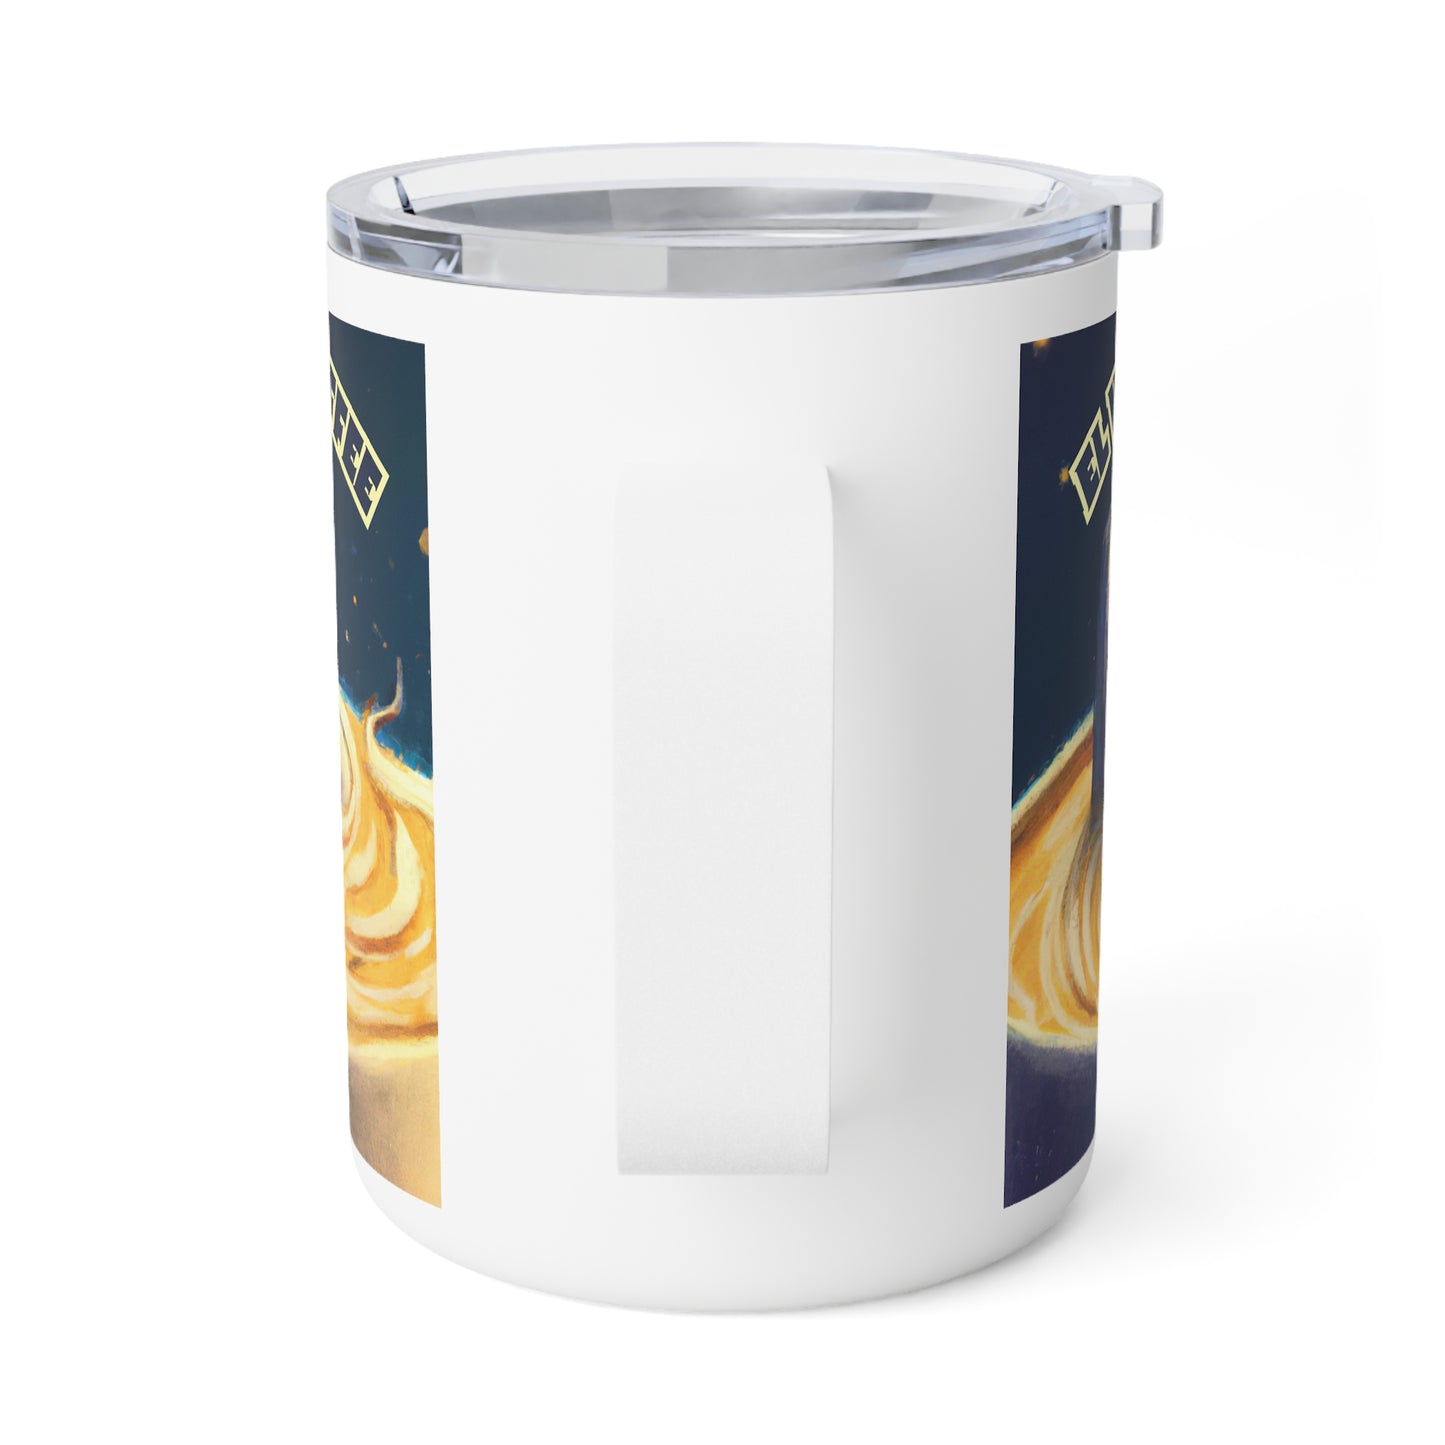 El Viajero in the "Latte - Wave" - Insulated Coffee Mug, 10oz